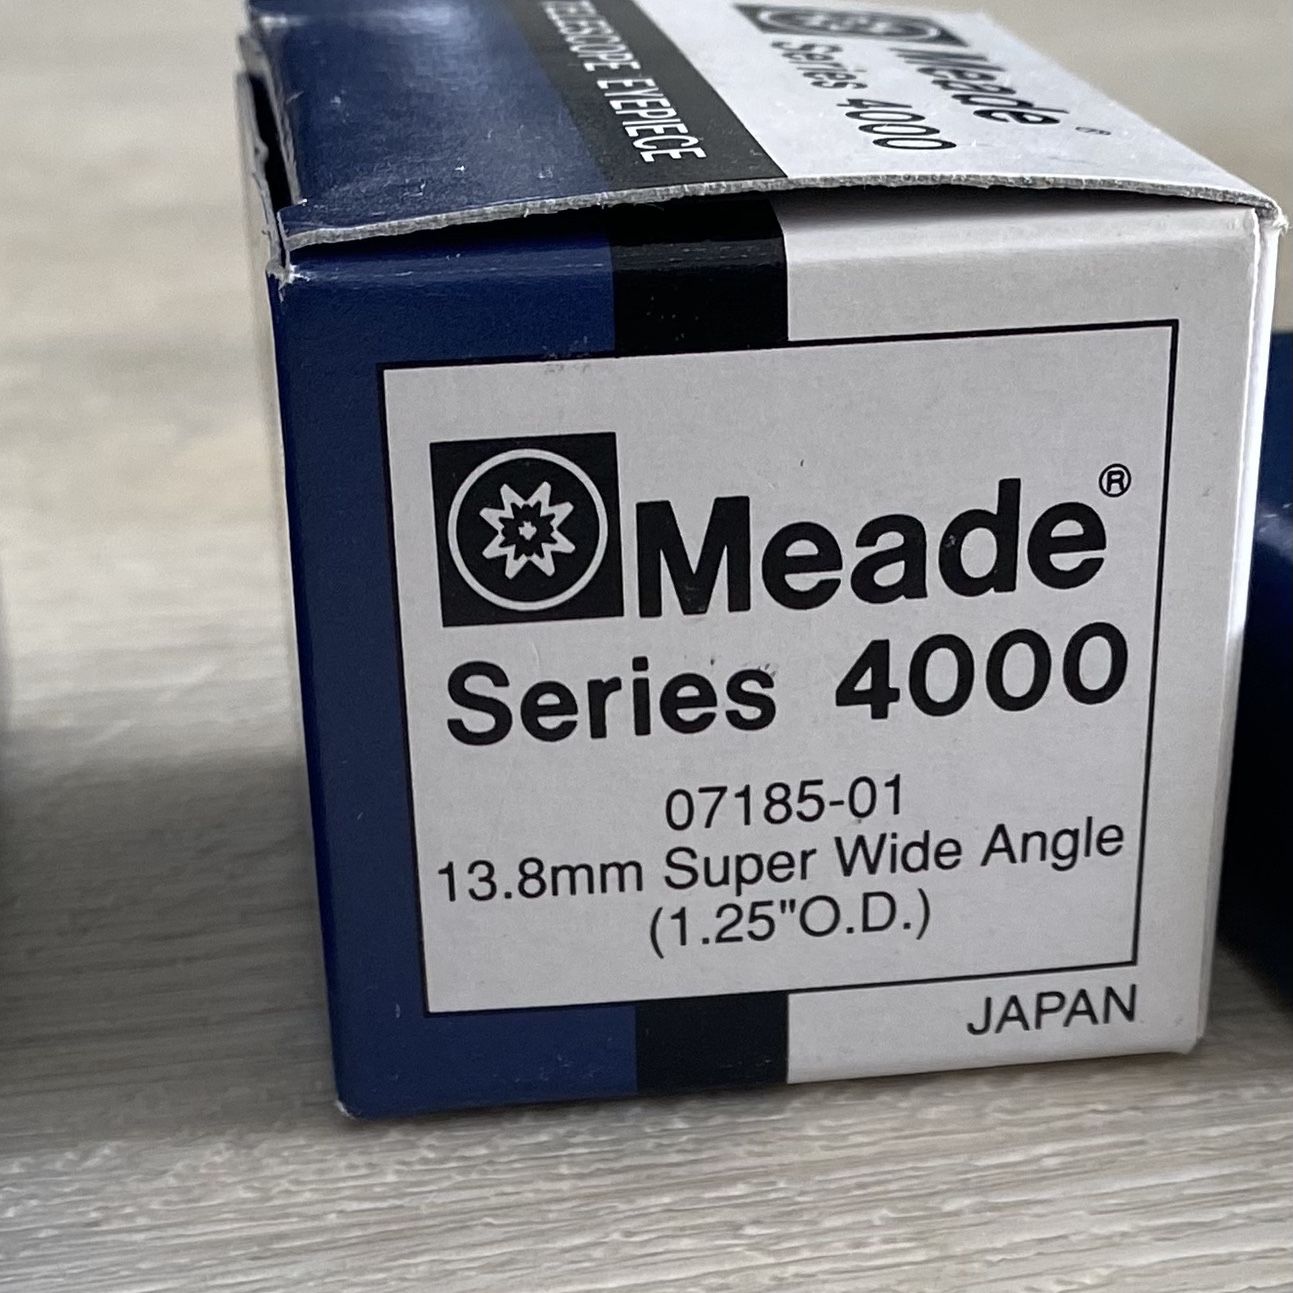 Meade Series 4000 13.8mm Telescope Eyepiece for Sale in Santa Monica, CA -  OfferUp